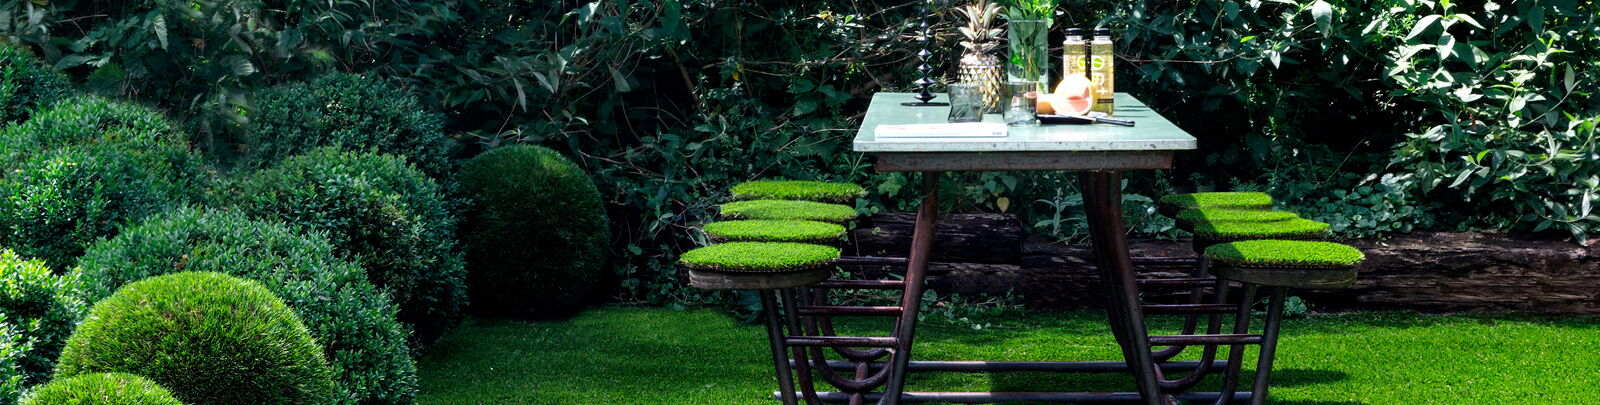 Terrace Garden Turfgrass